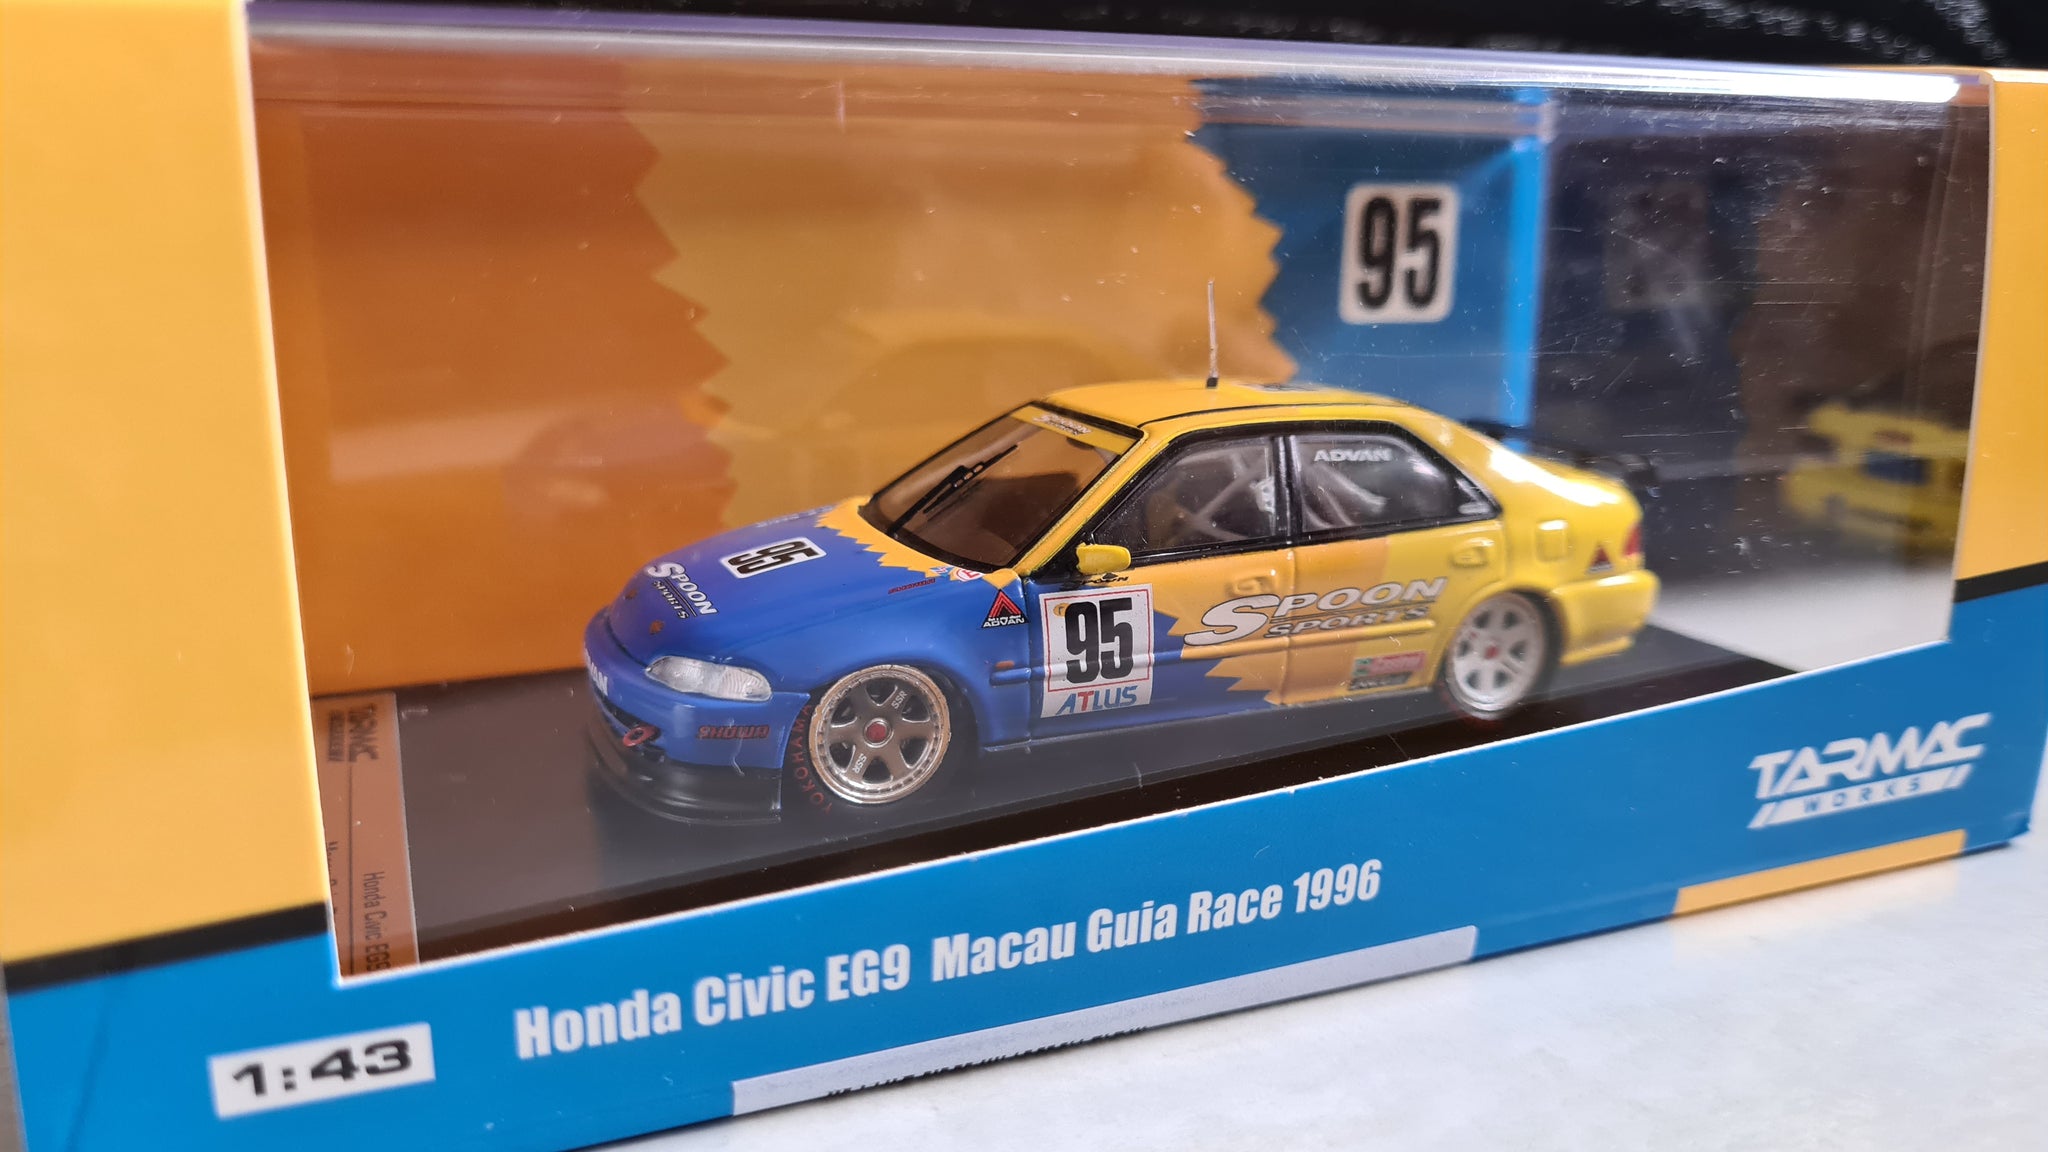 Second Hand] Honda Civic EG9 Macau Guia Race 1996 - Tarmac Works